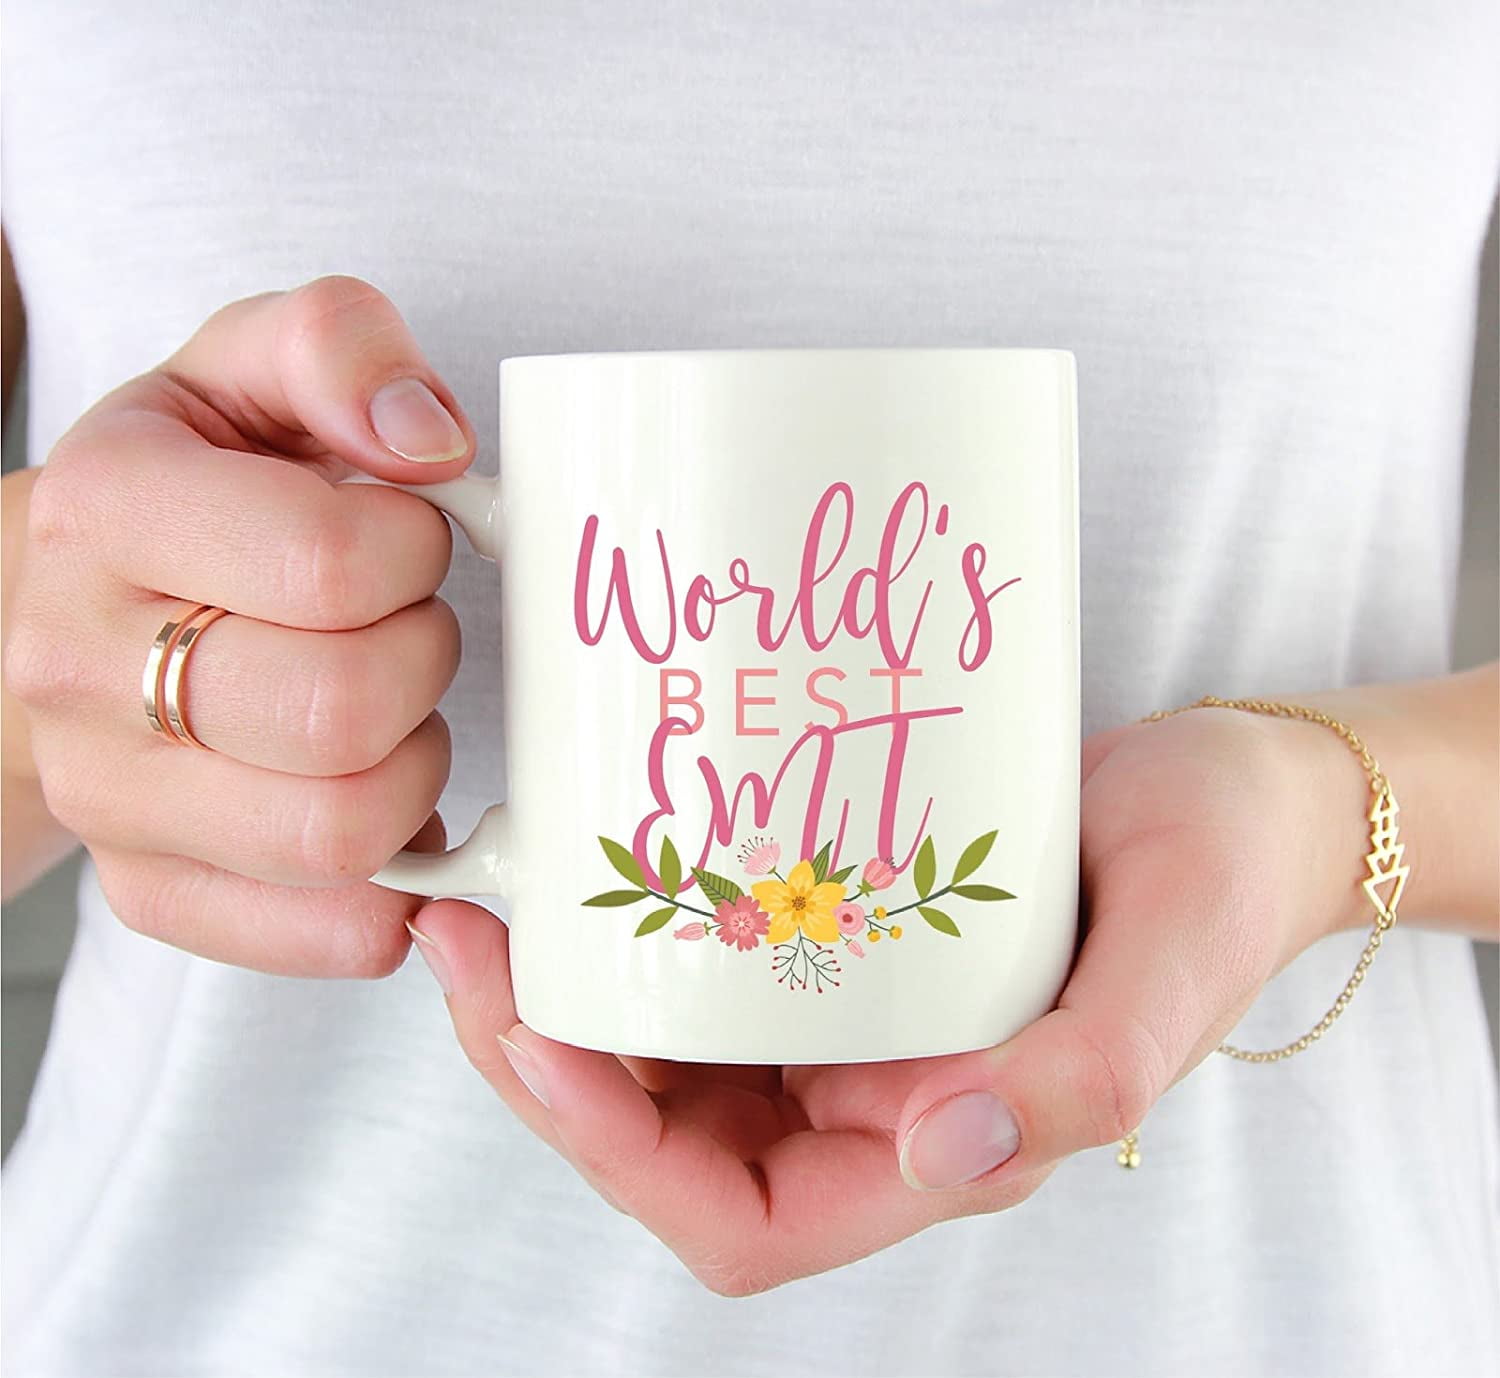 Wellmore 1 Piece World's Best Teacher Novelty Mug White Ceramic Coffee Mug  11oz